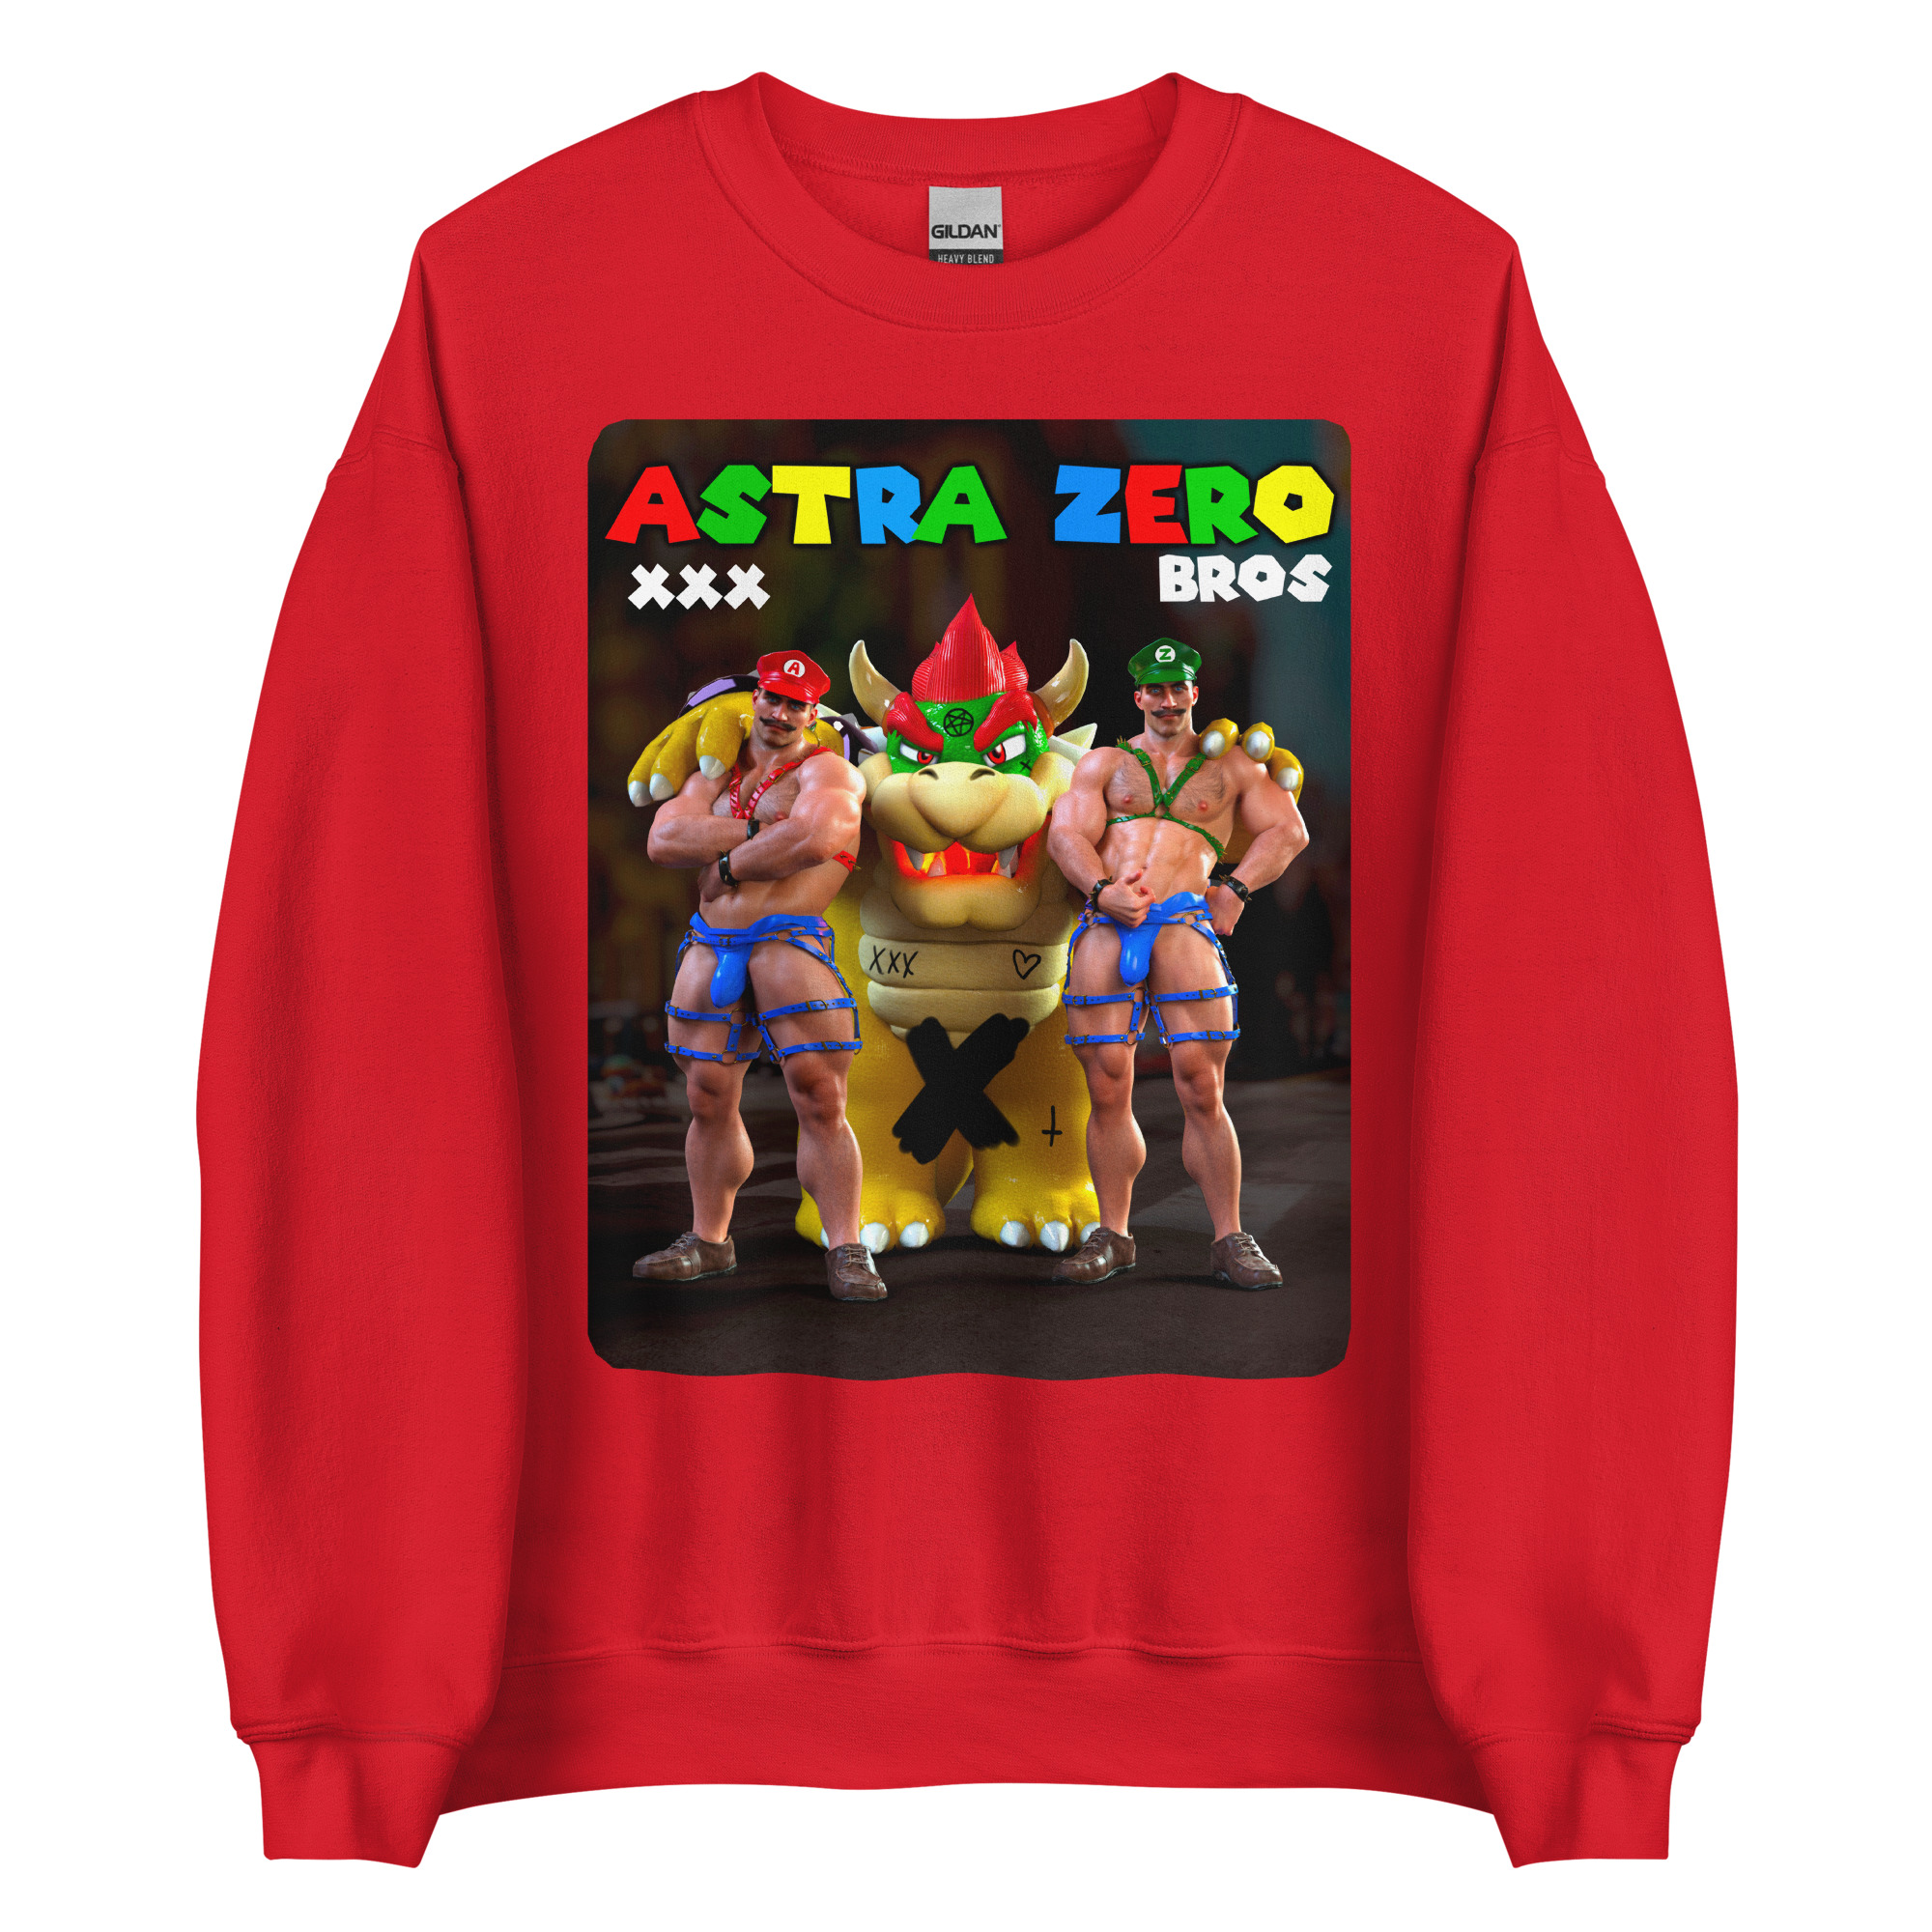 Featured image for “Astra Zero Bros - Unisex Gildan Sweatshirt”